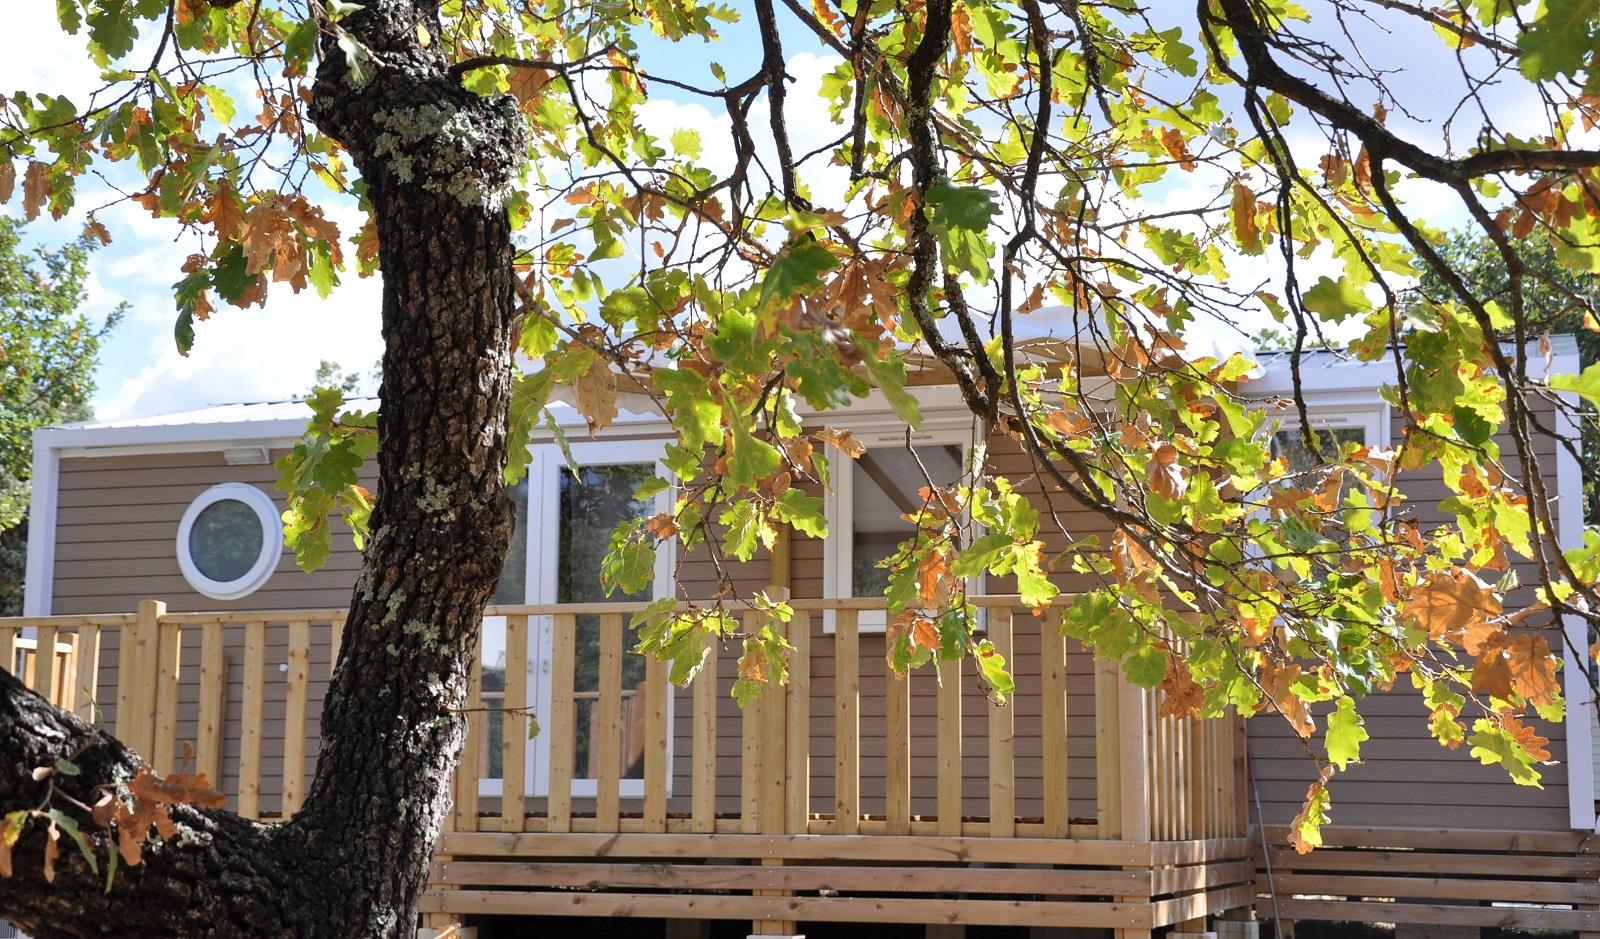 Location - Cottage Premium Climatisation D (35M² + 18M² Terrace Avec Pergola, 3 Chambres) - Camping L'Ombrage